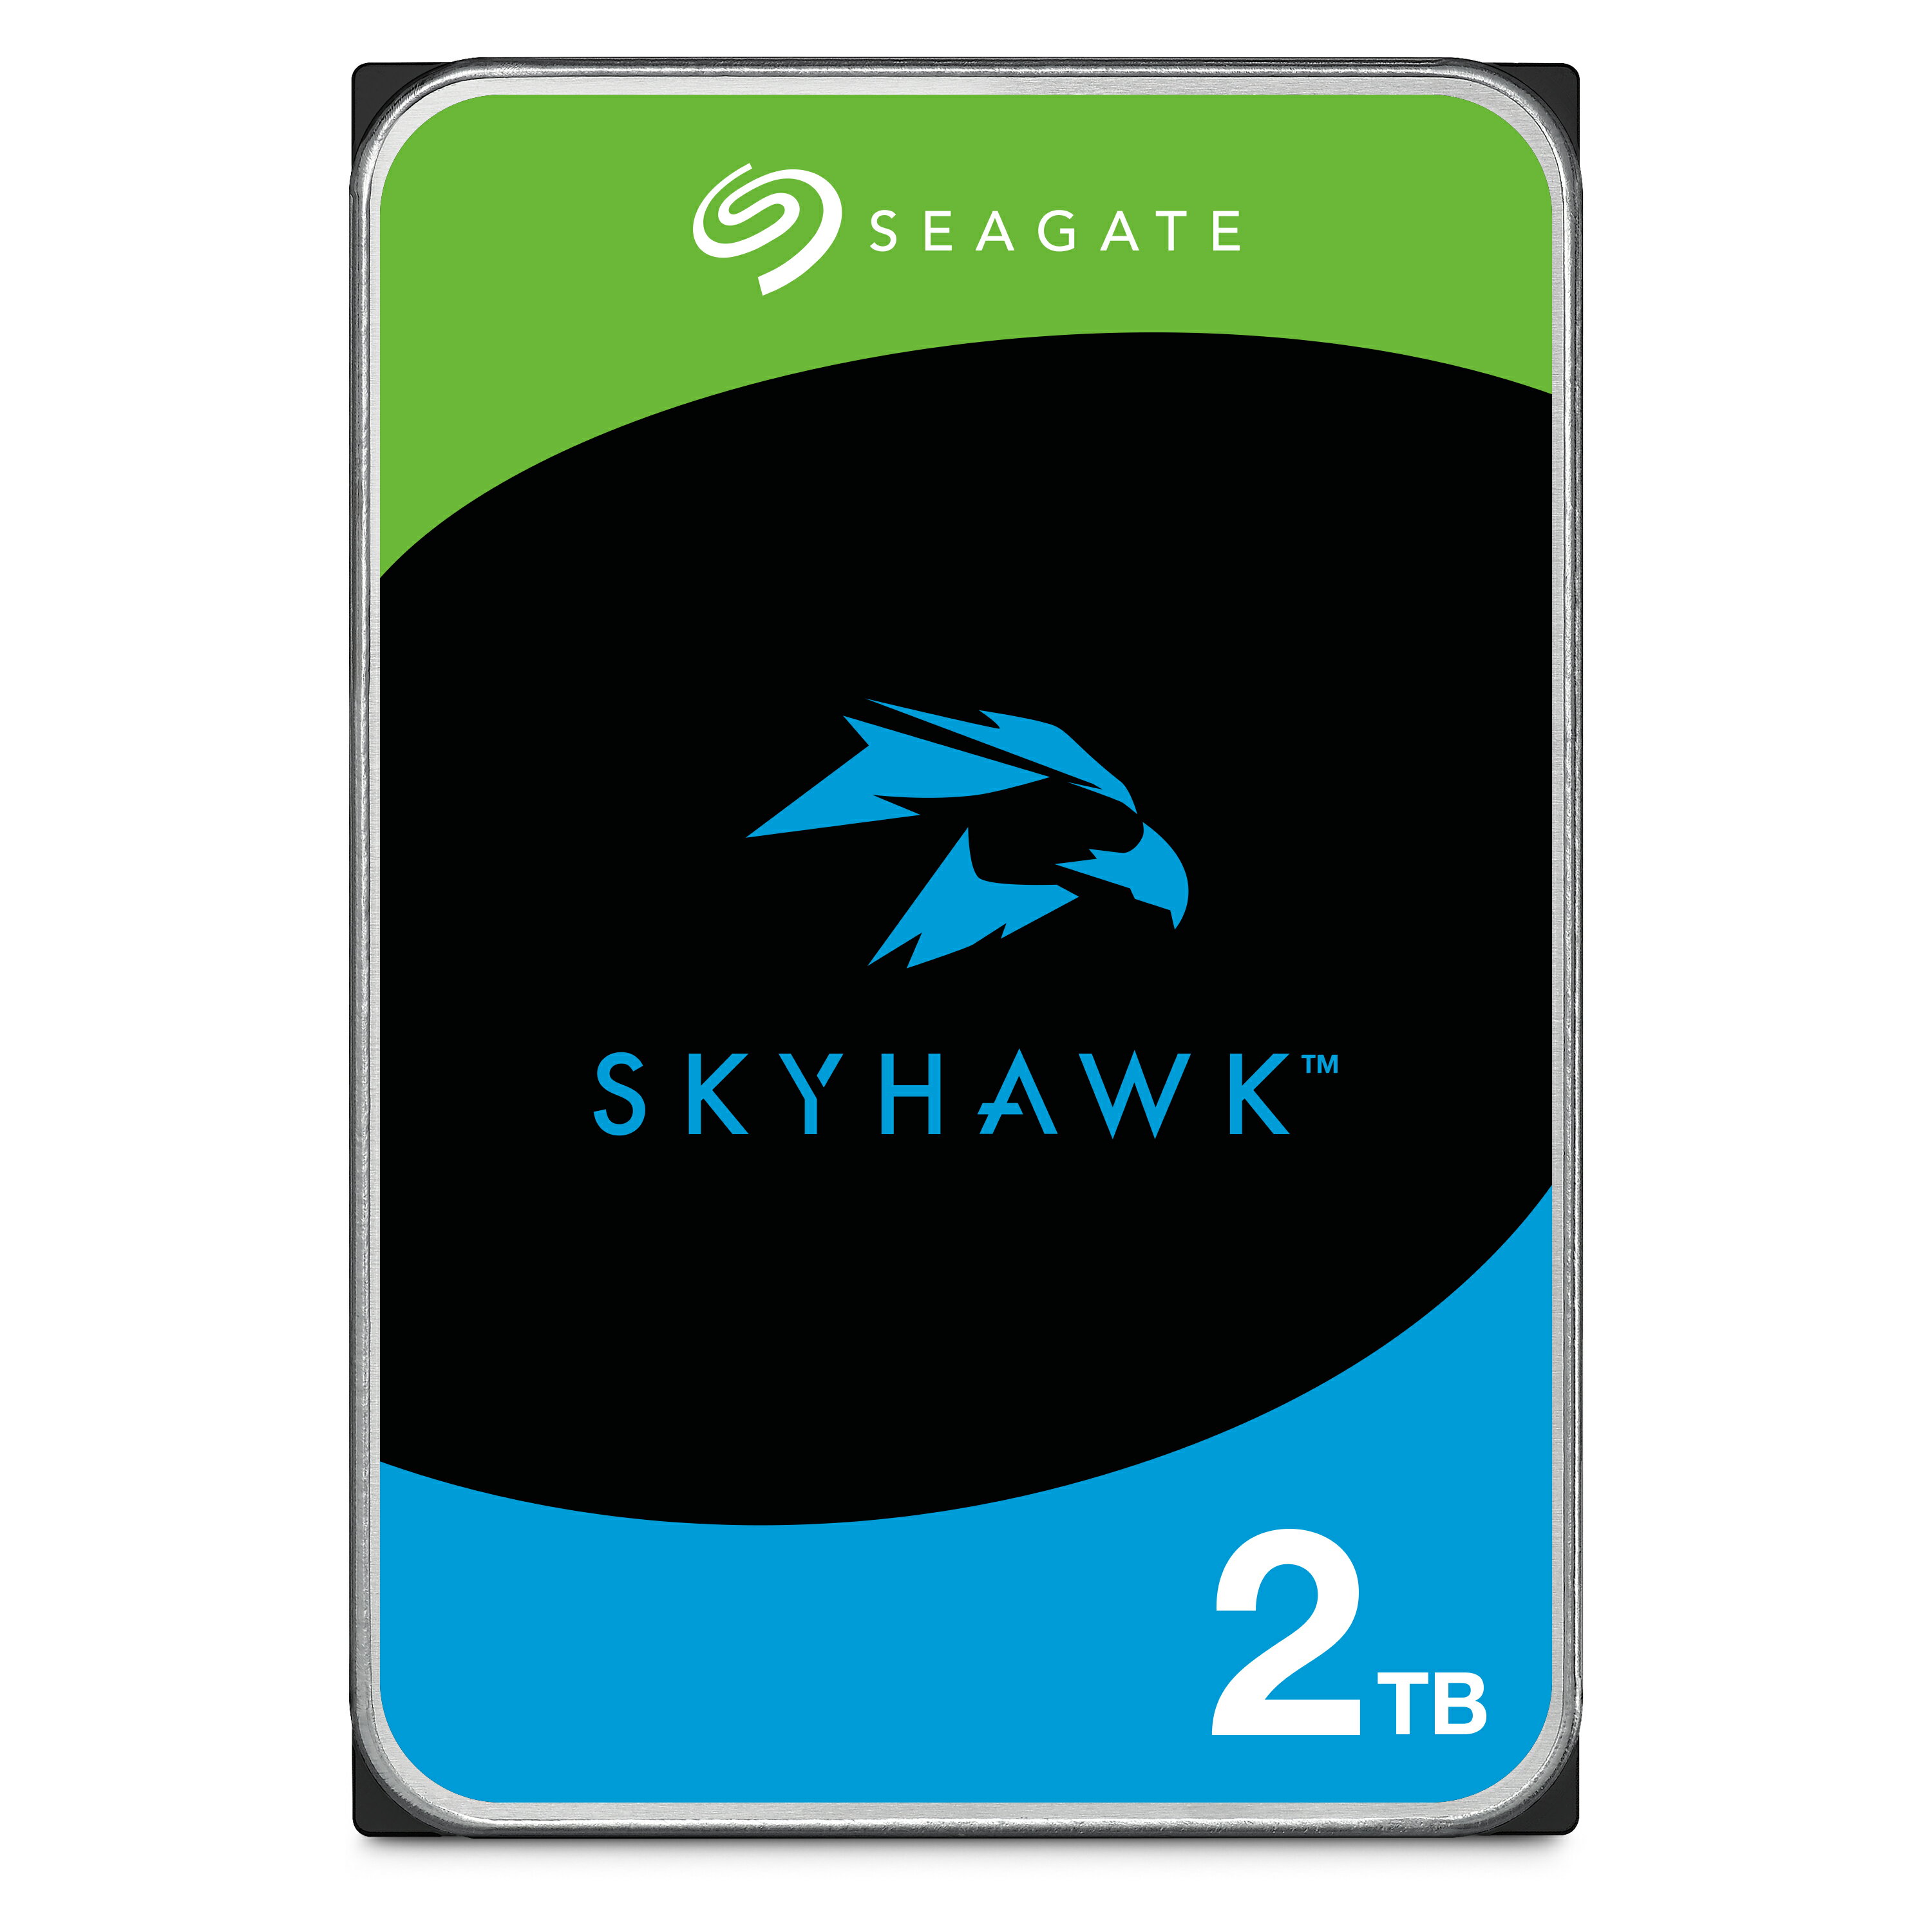 Seagate シーゲイト SkyHawk 3.5インチ 【データ復旧 3年付】 2TB 内蔵 ハードディスク HDD CMR 3年保証 6Gb/s 256MB…